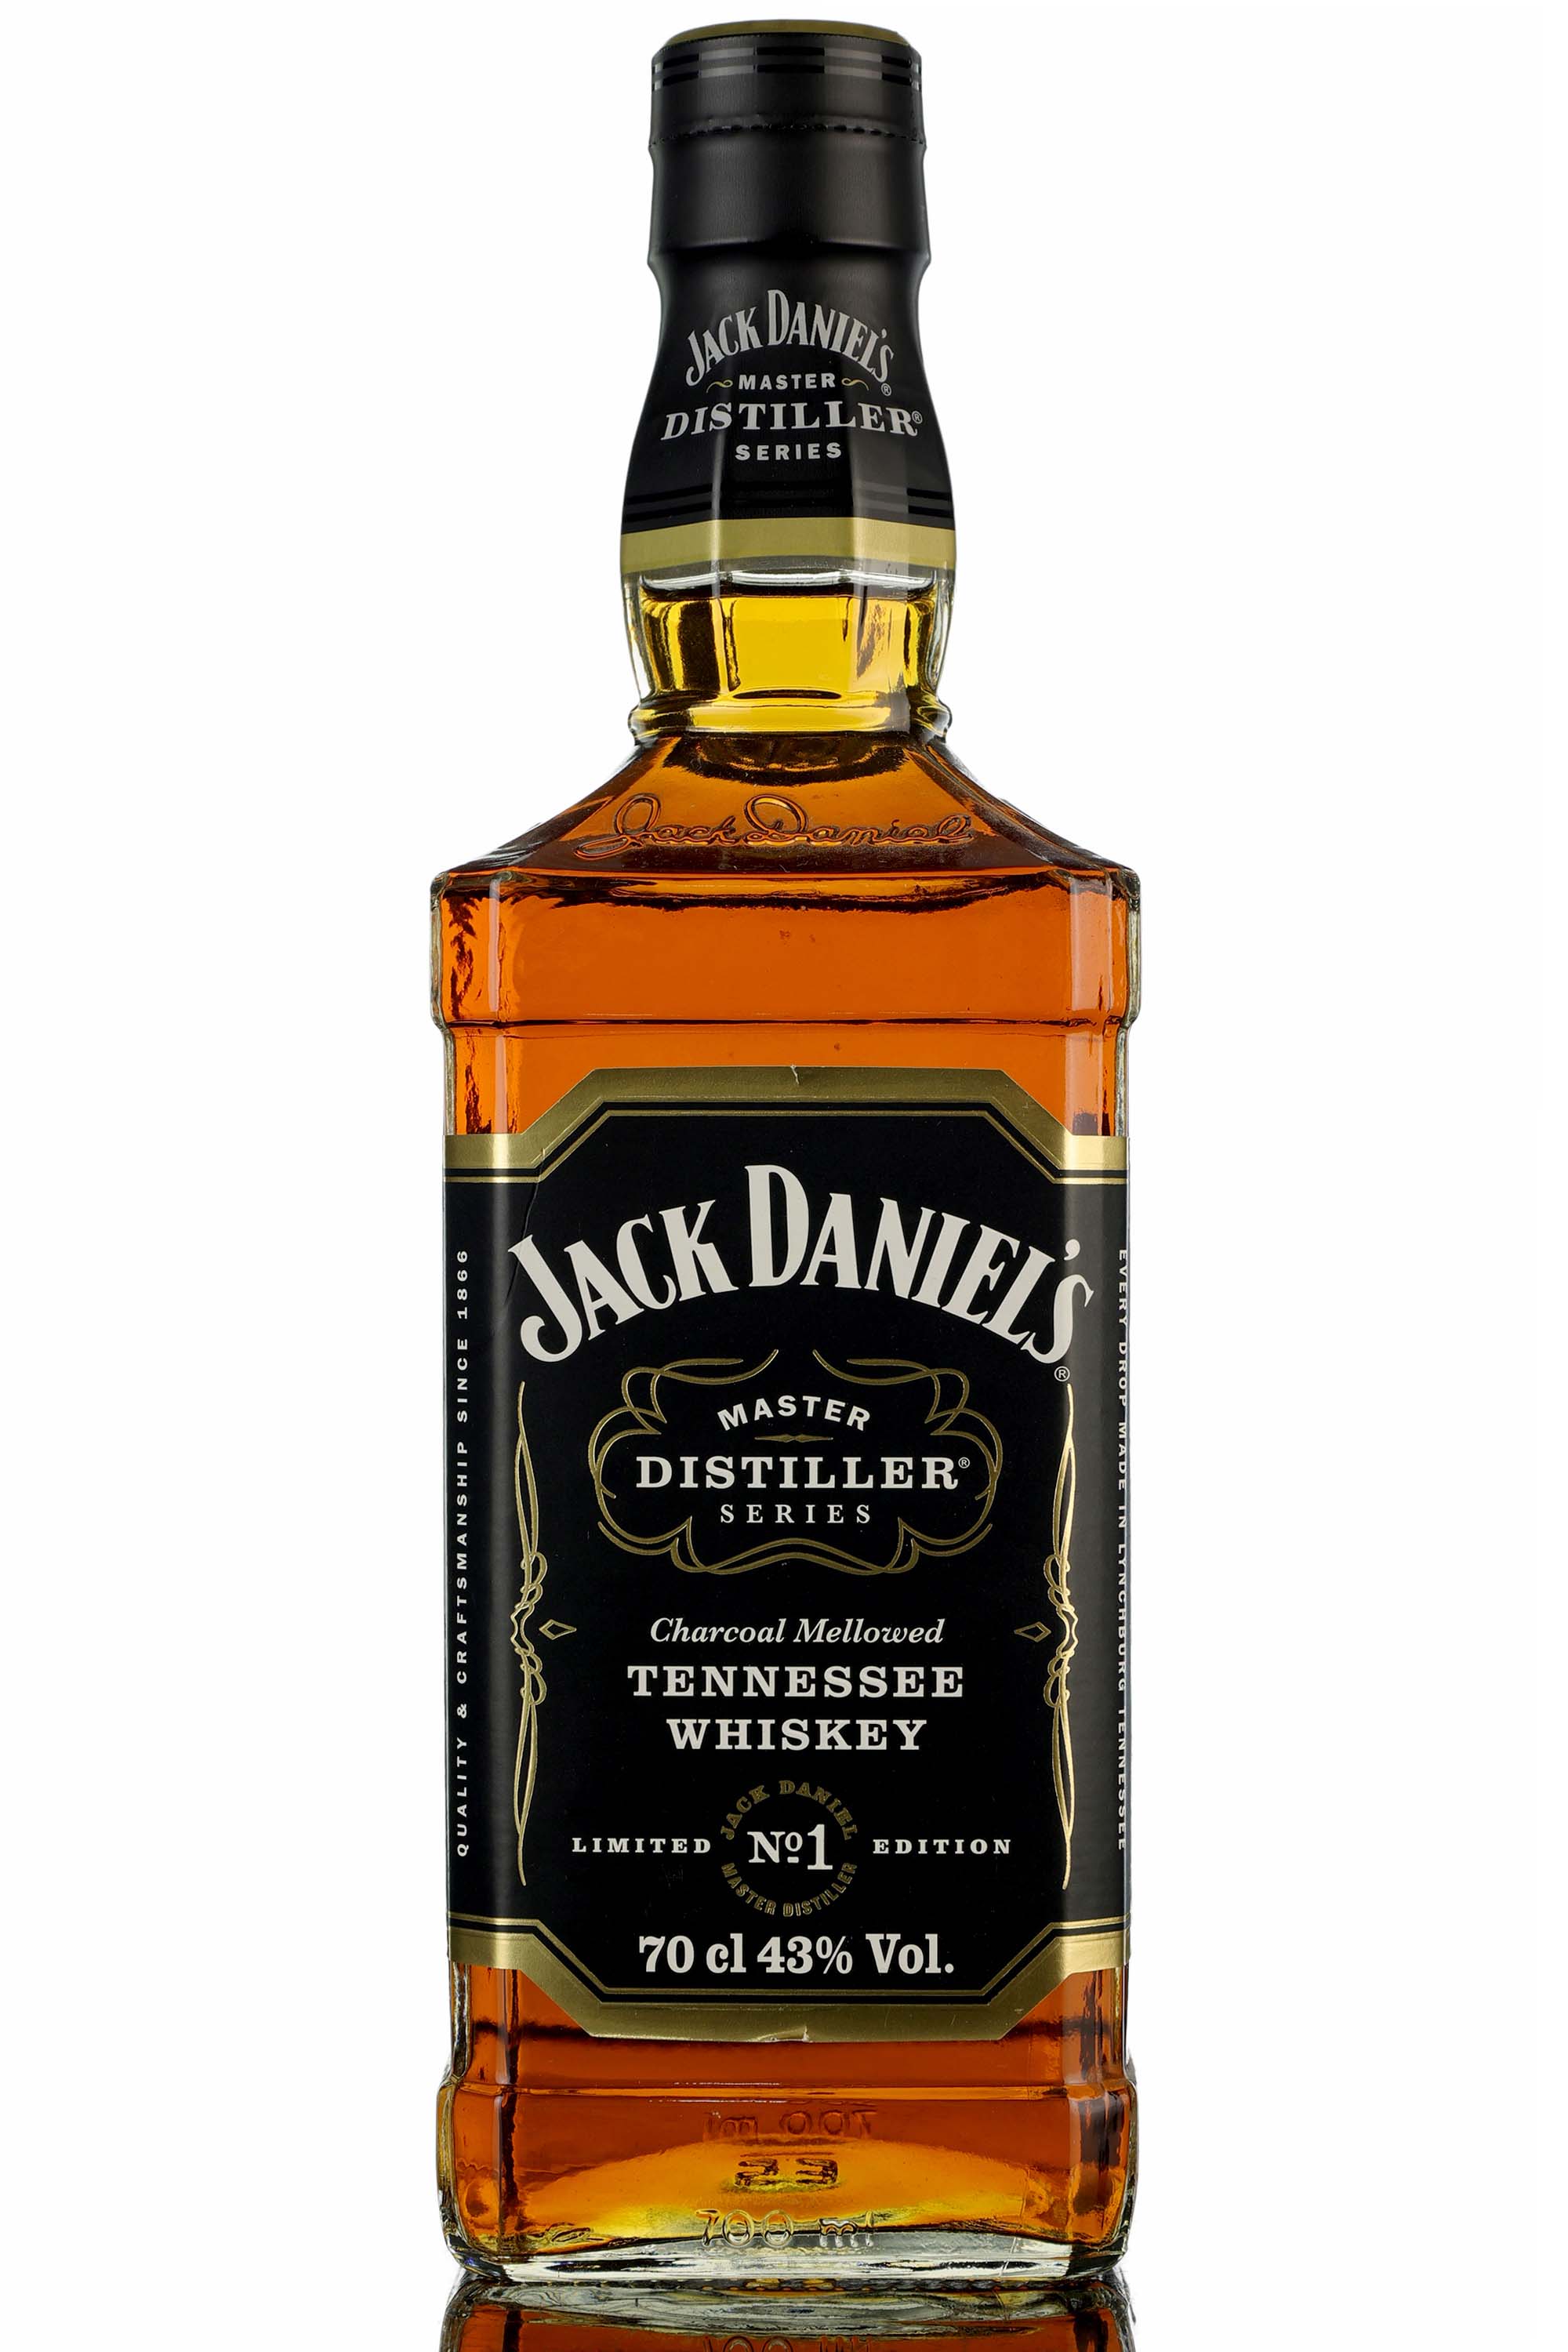 Jack Daniels Master Distiller Series No1 - 2012 Release